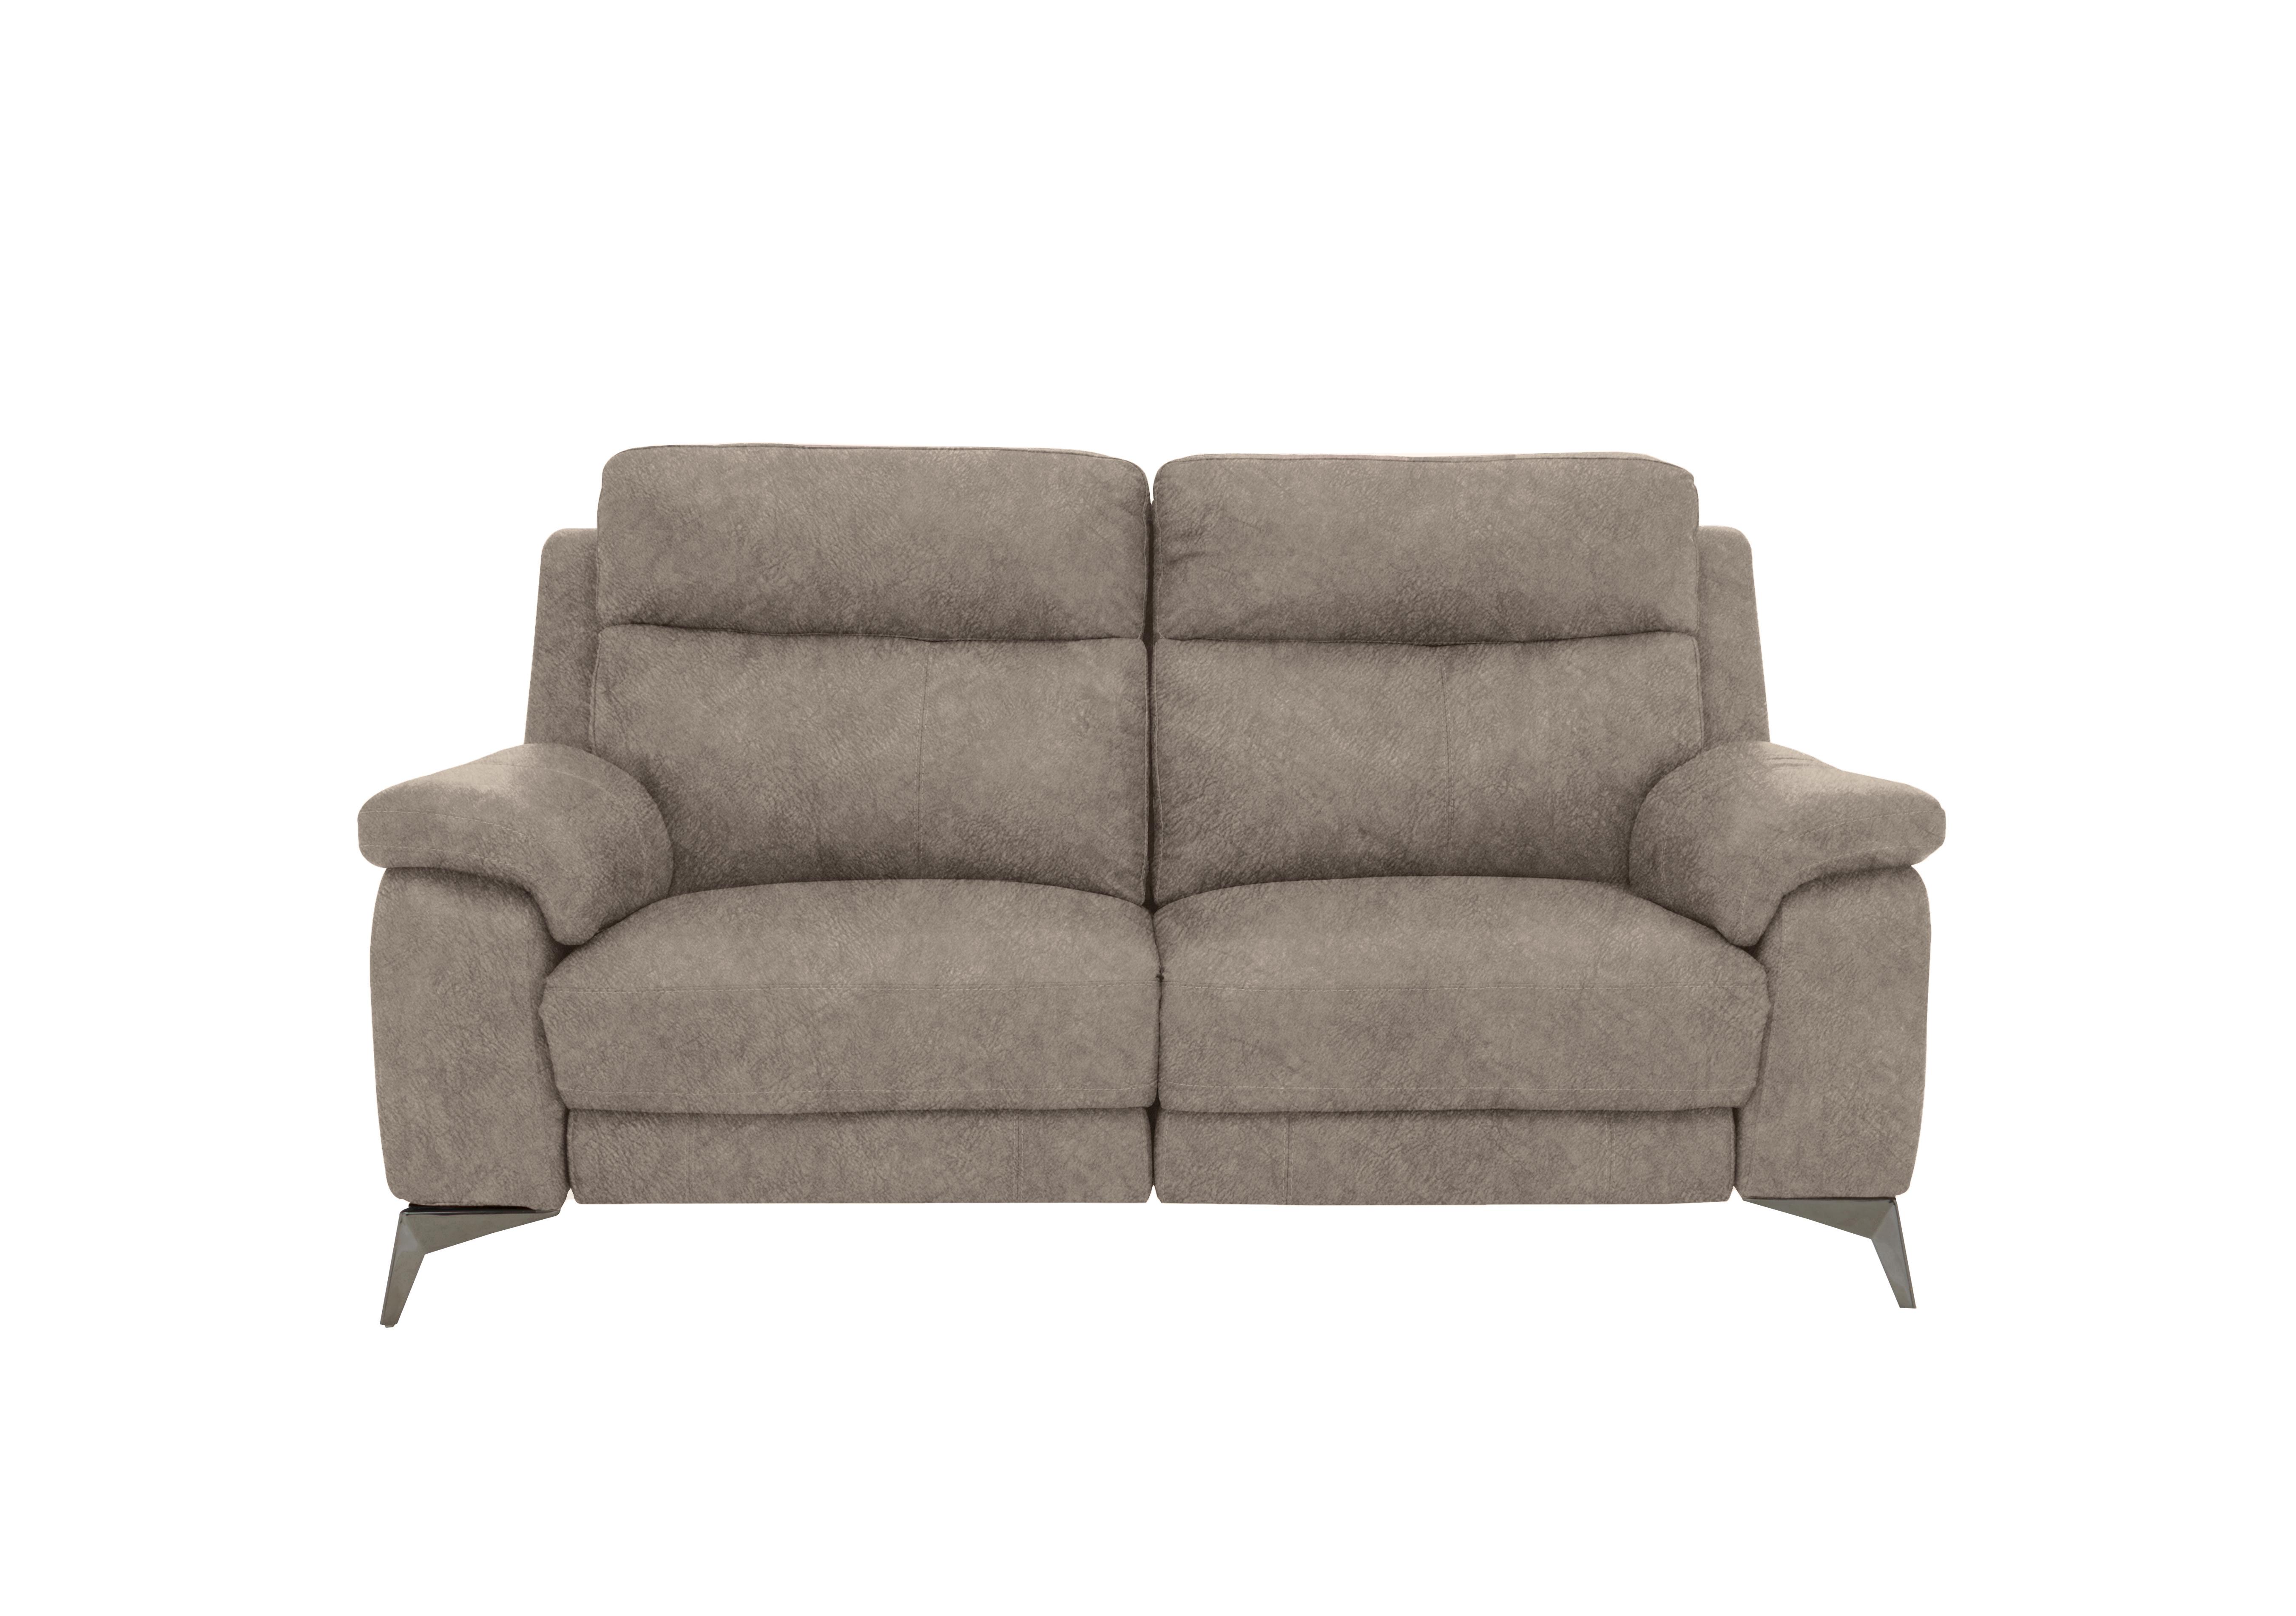 Missouri 2 Seater Fabric Sofa in Bfa-Bnn-R29 Fv1 Mink on Furniture Village